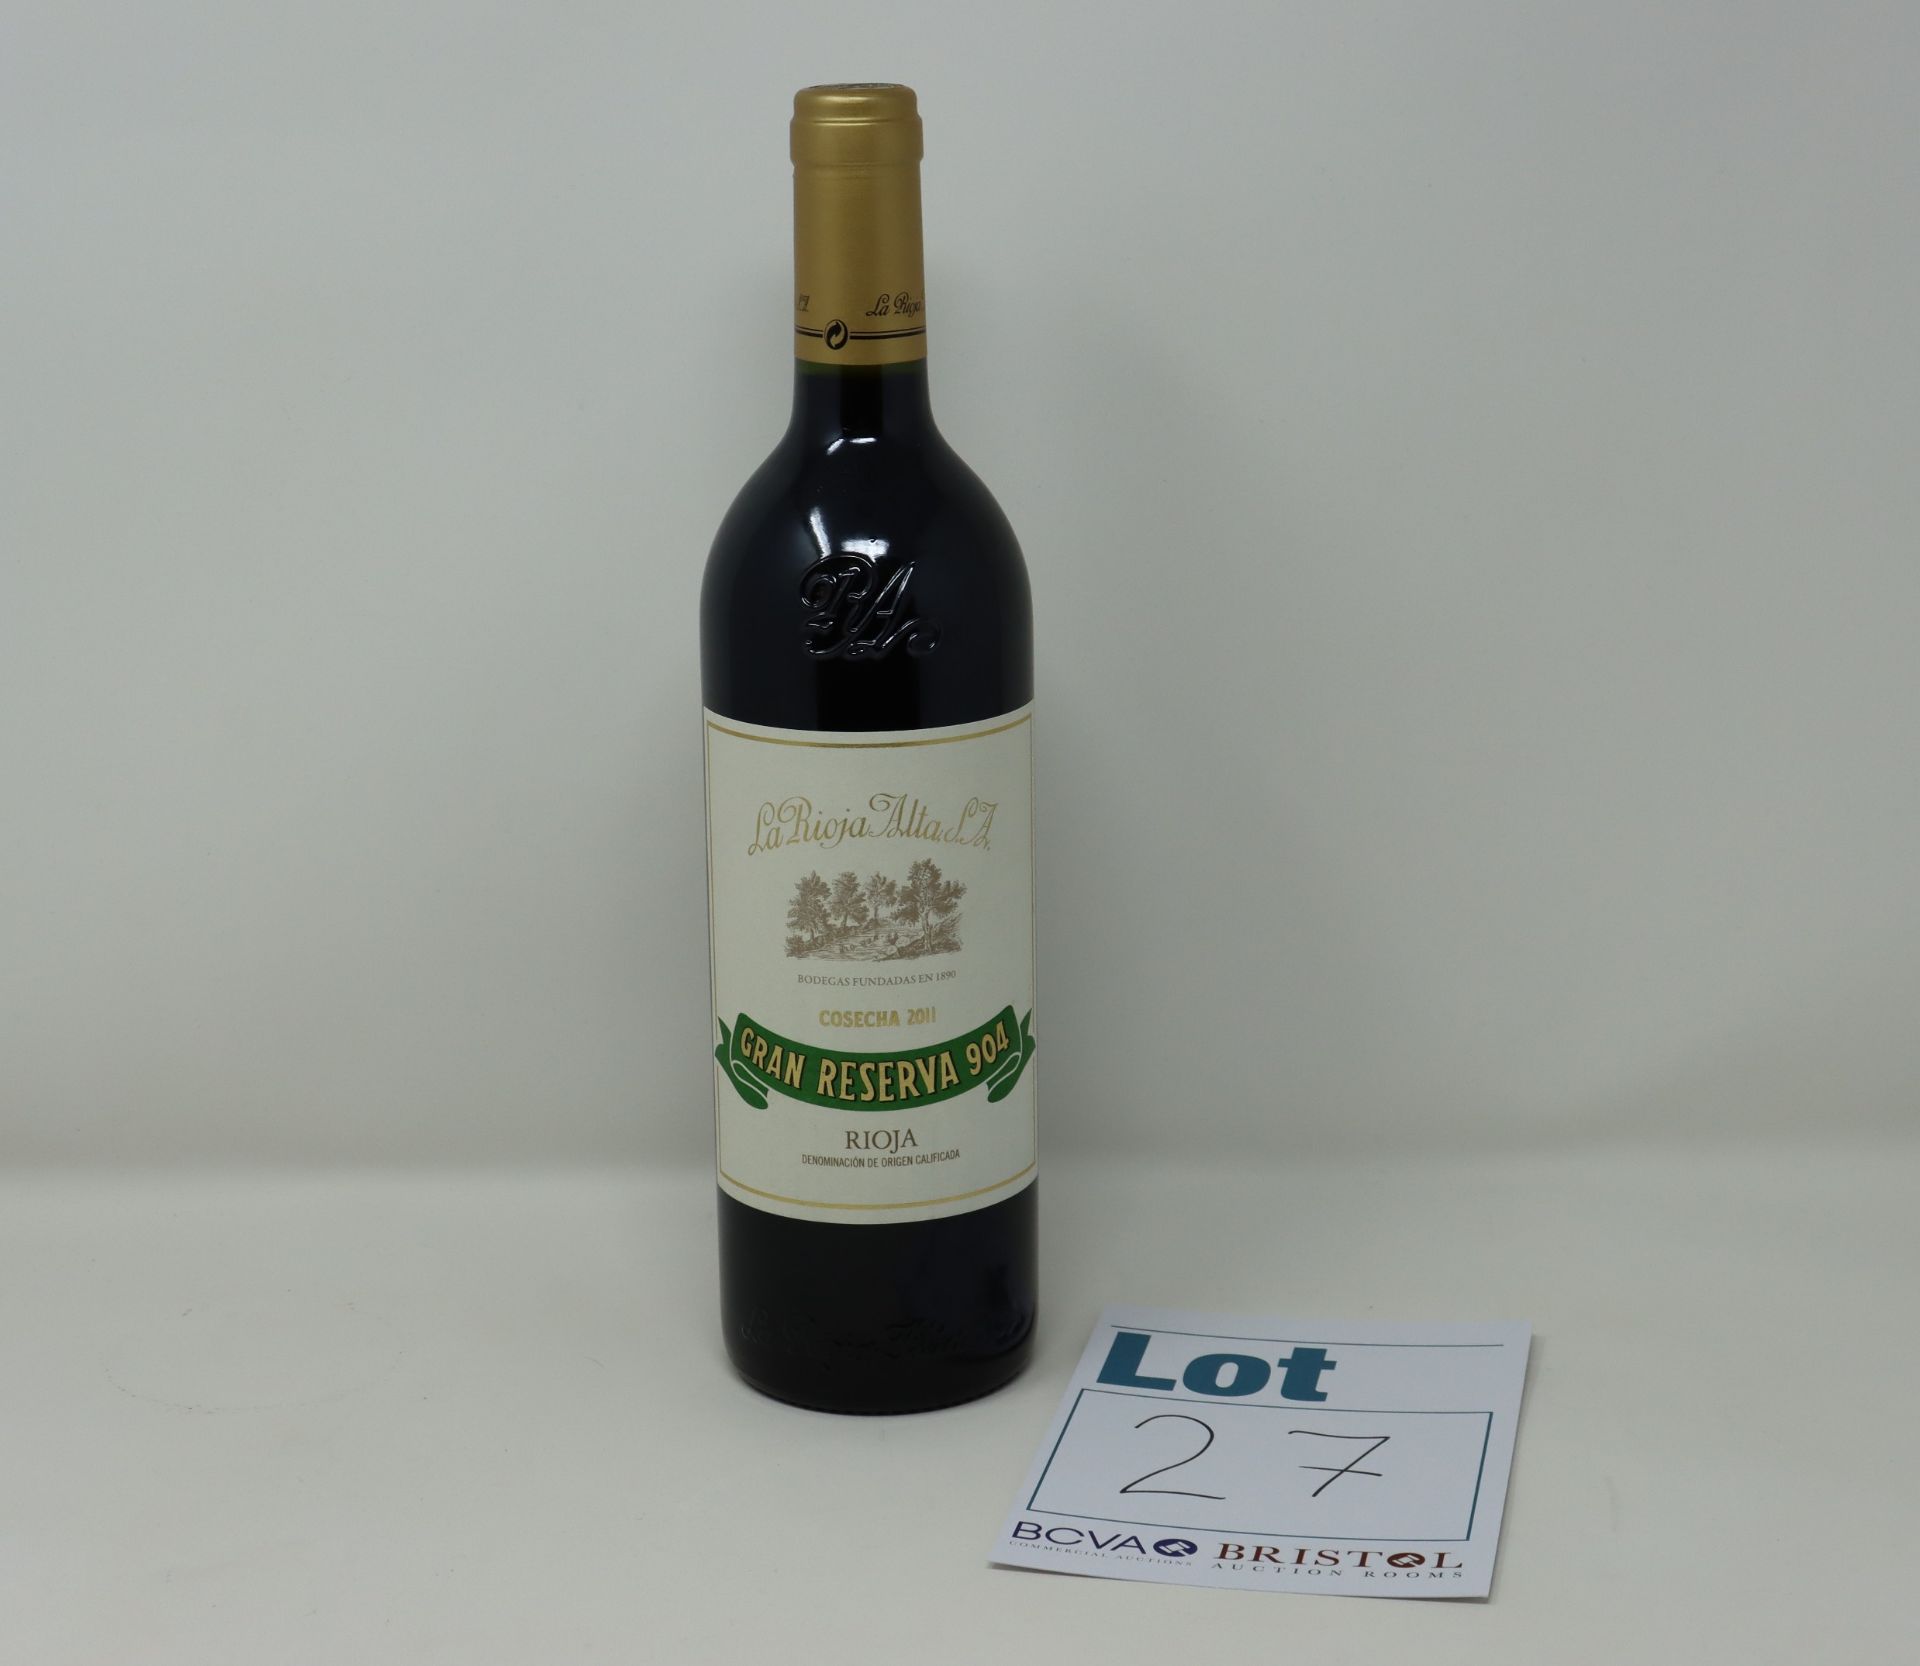 Six bottles of La Rioja Alta Gran Reserva 904 2011 (750ml, over 18s only).